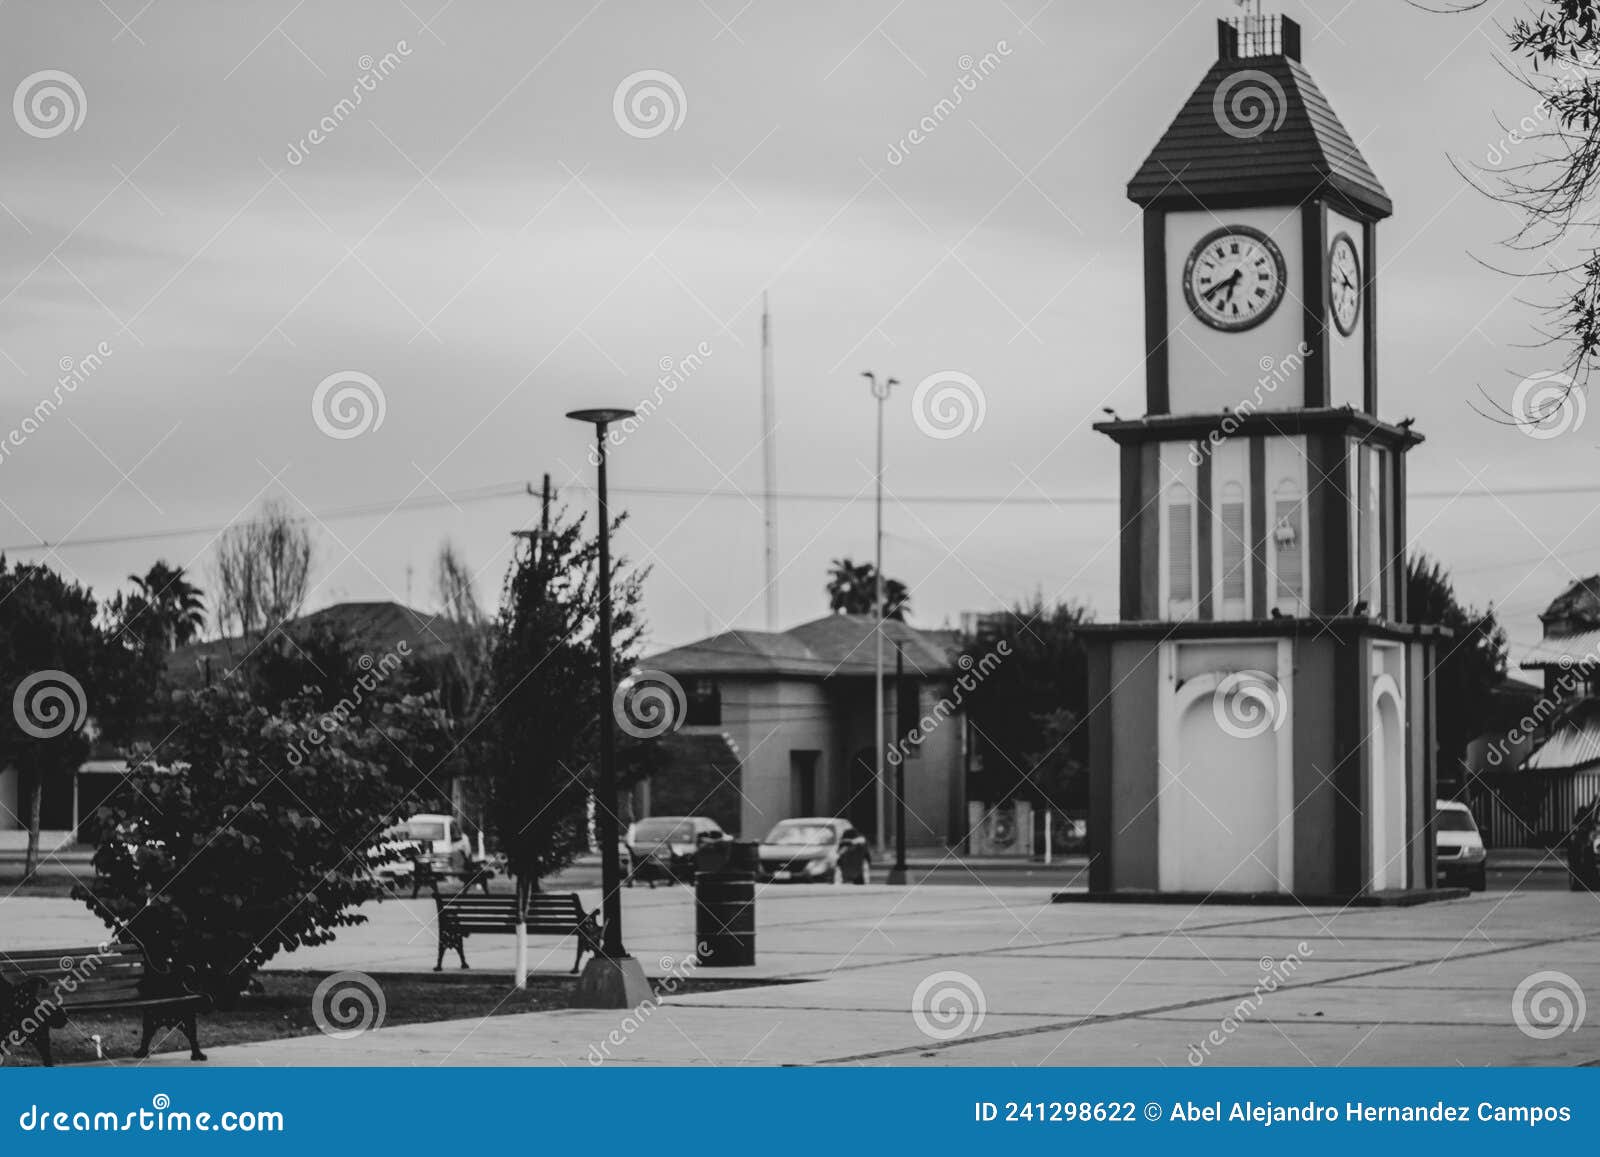 clock tower of macroplaza of the city of piedras negras coahuila